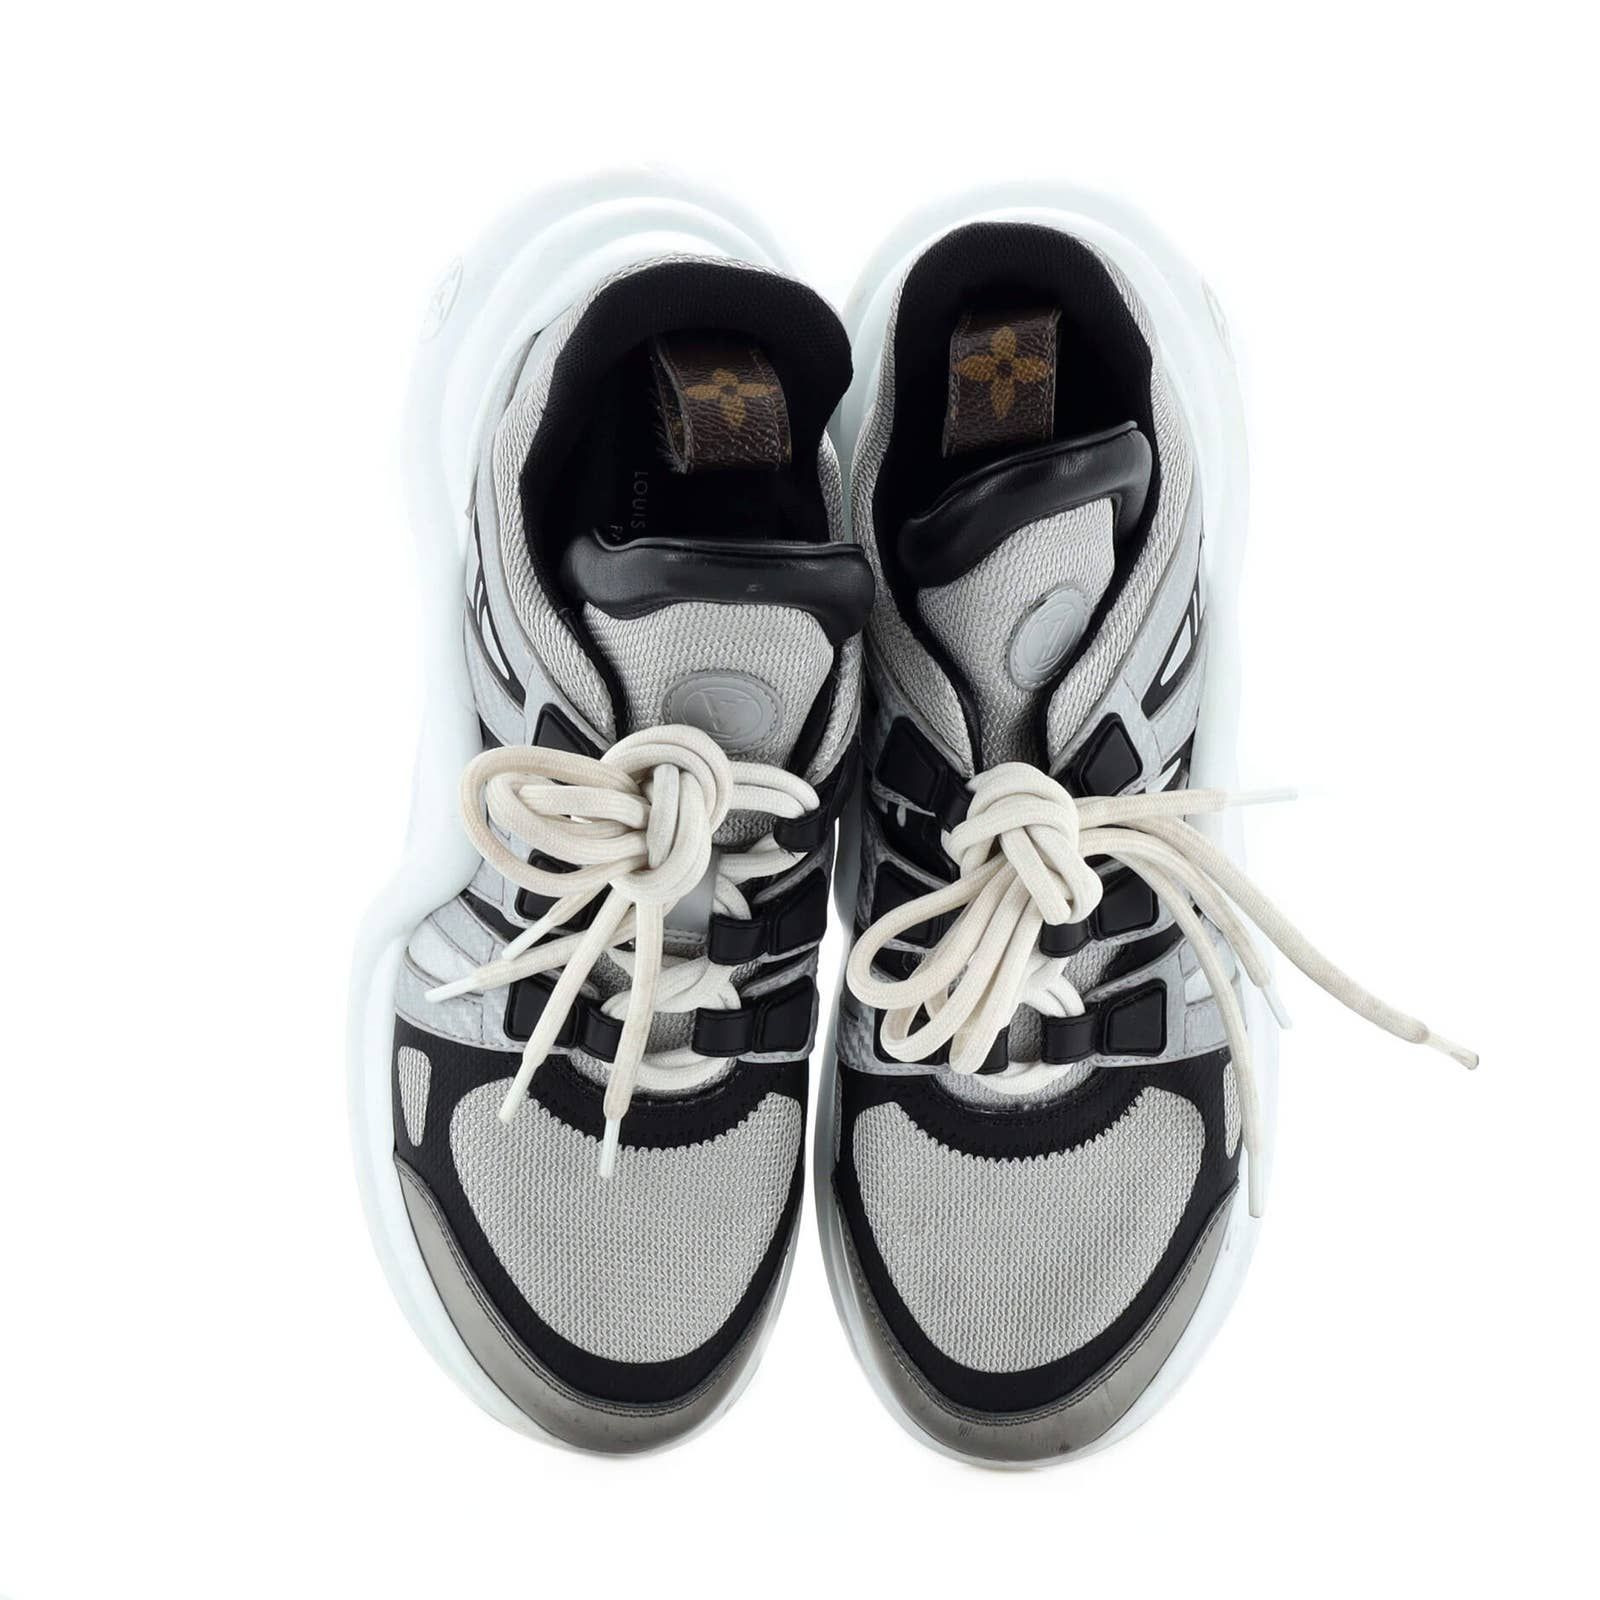 Louis Vuitton White/Monogram Canvas and Leather Archlight Sneakers Size 37  Louis Vuitton